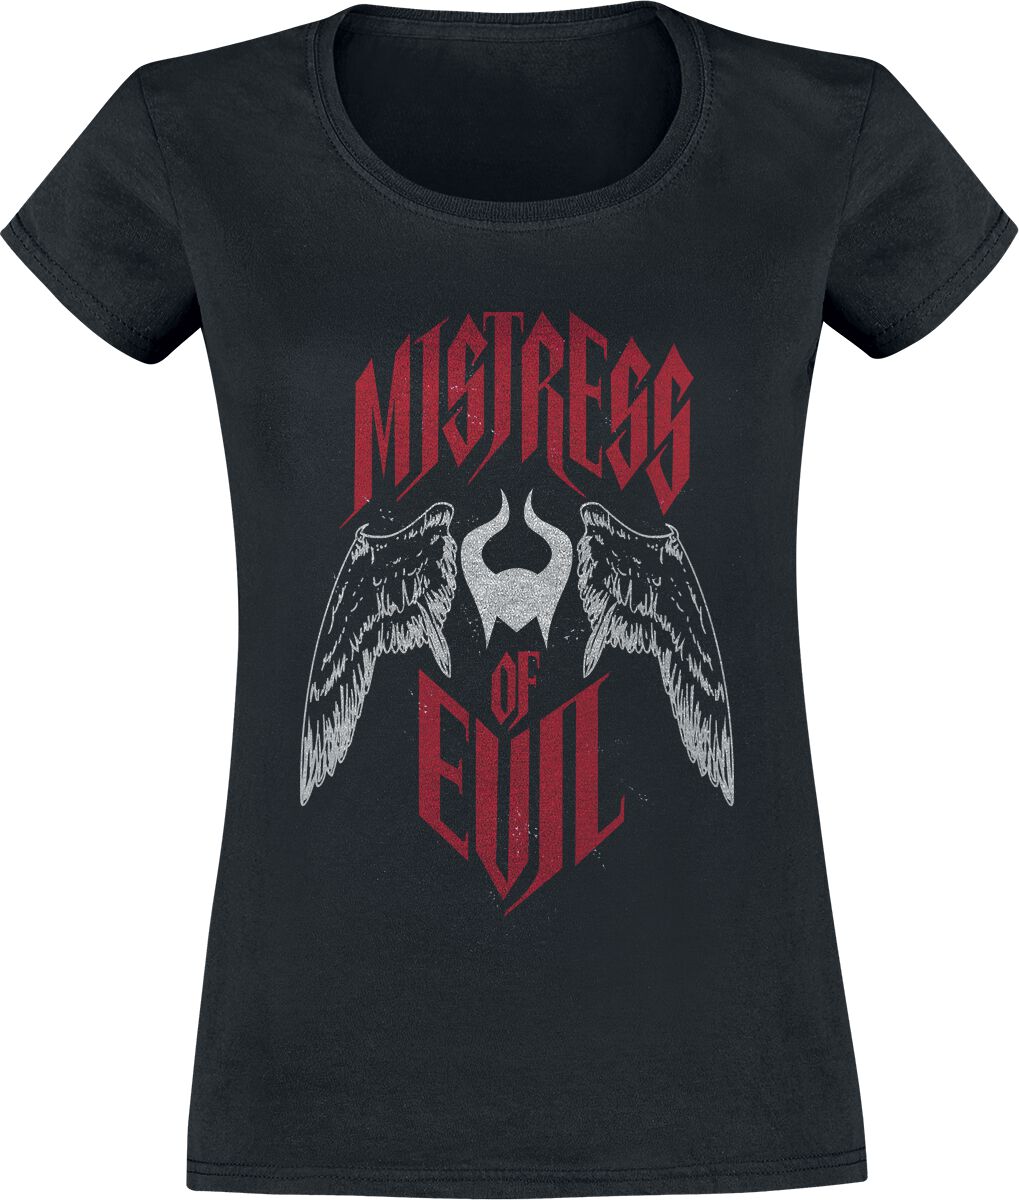 Maleficent - Mistress Of Evil - T-Shirt - Donna - nero